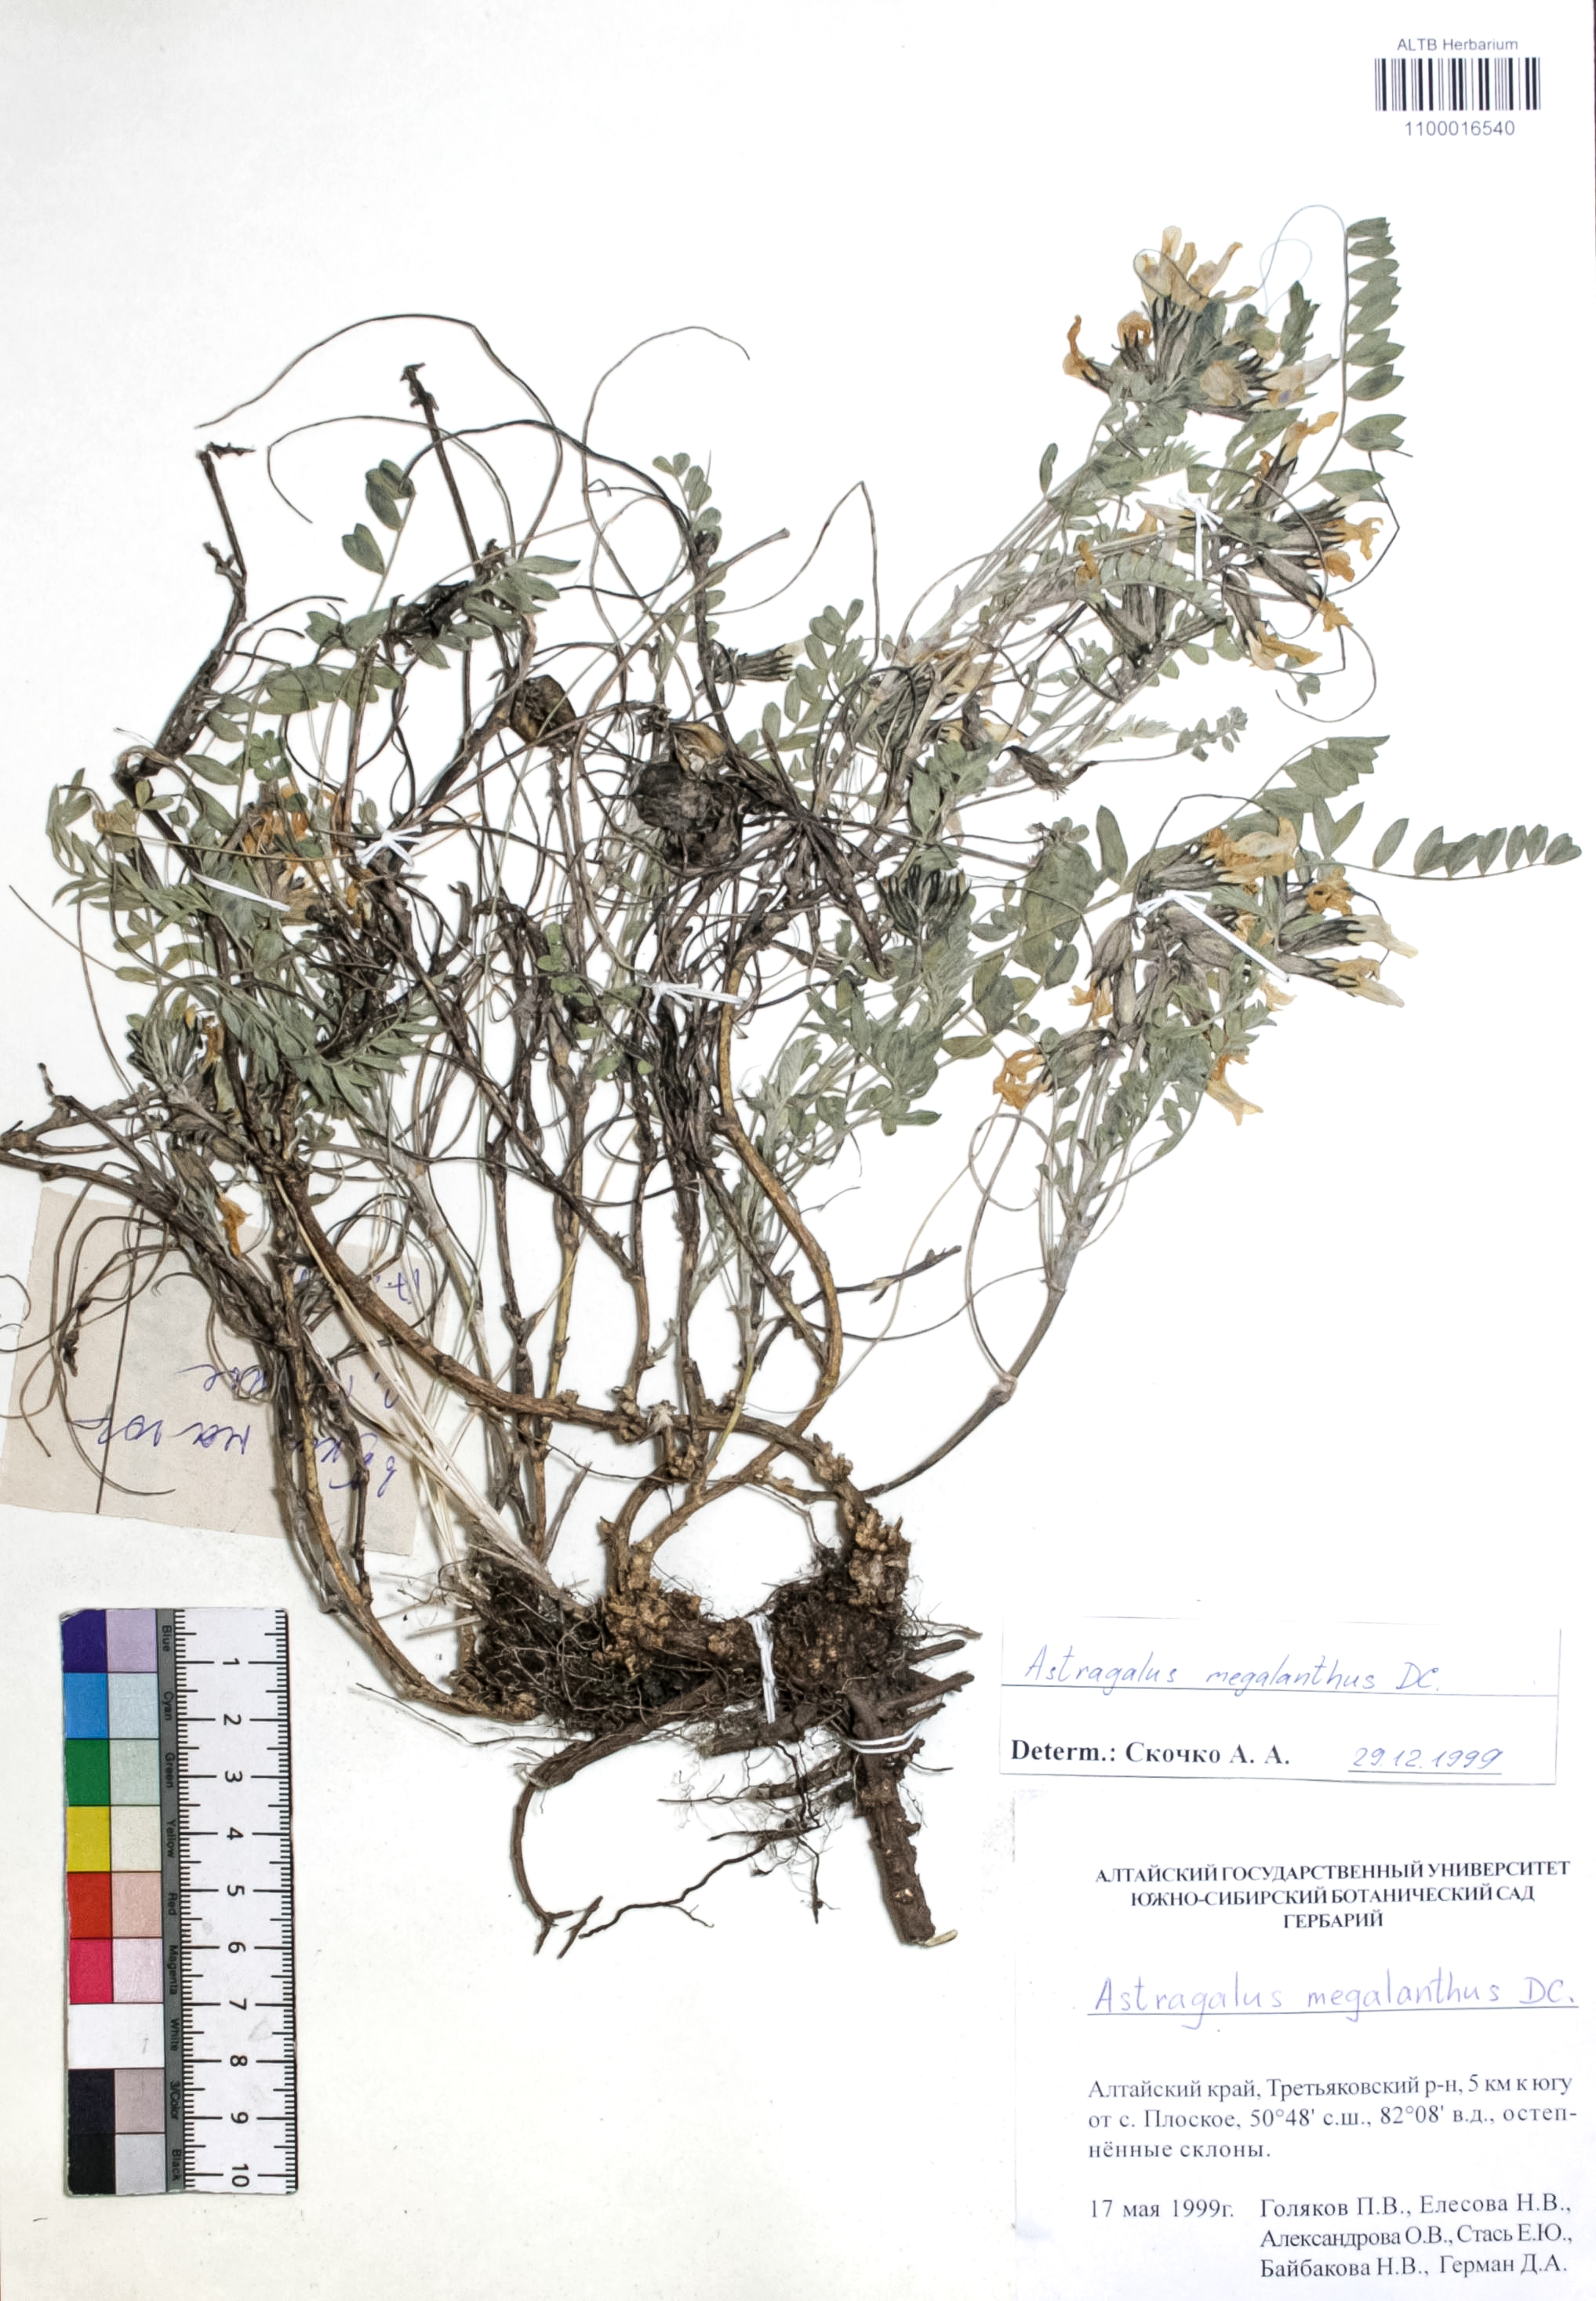 Astragalus macropterus DC.